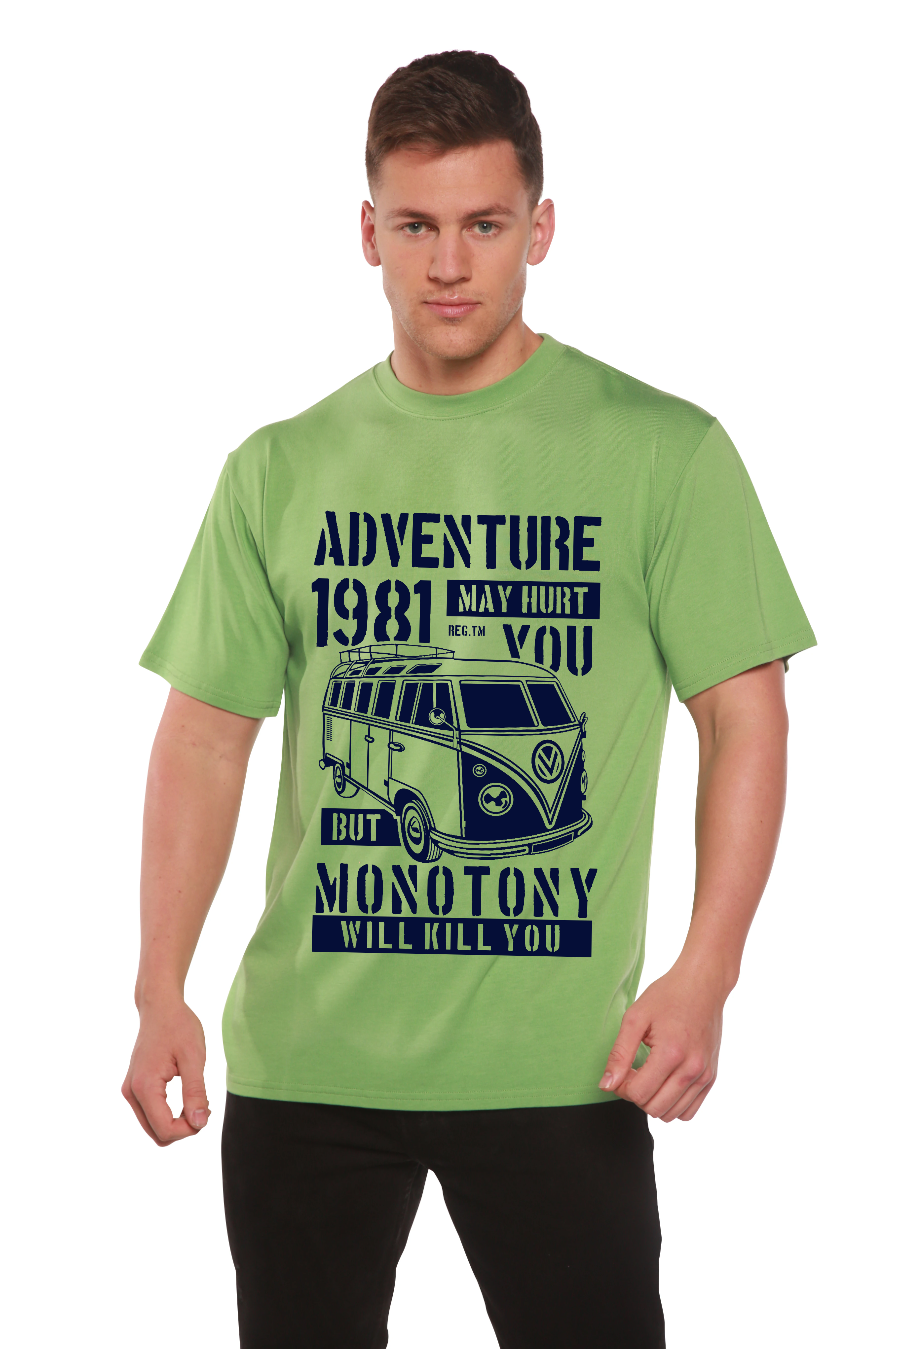 Adventure 1981 Men's Bamboo Viscose/Organic Cotton Short Sleeve T-Shirt - Spun Bamboo